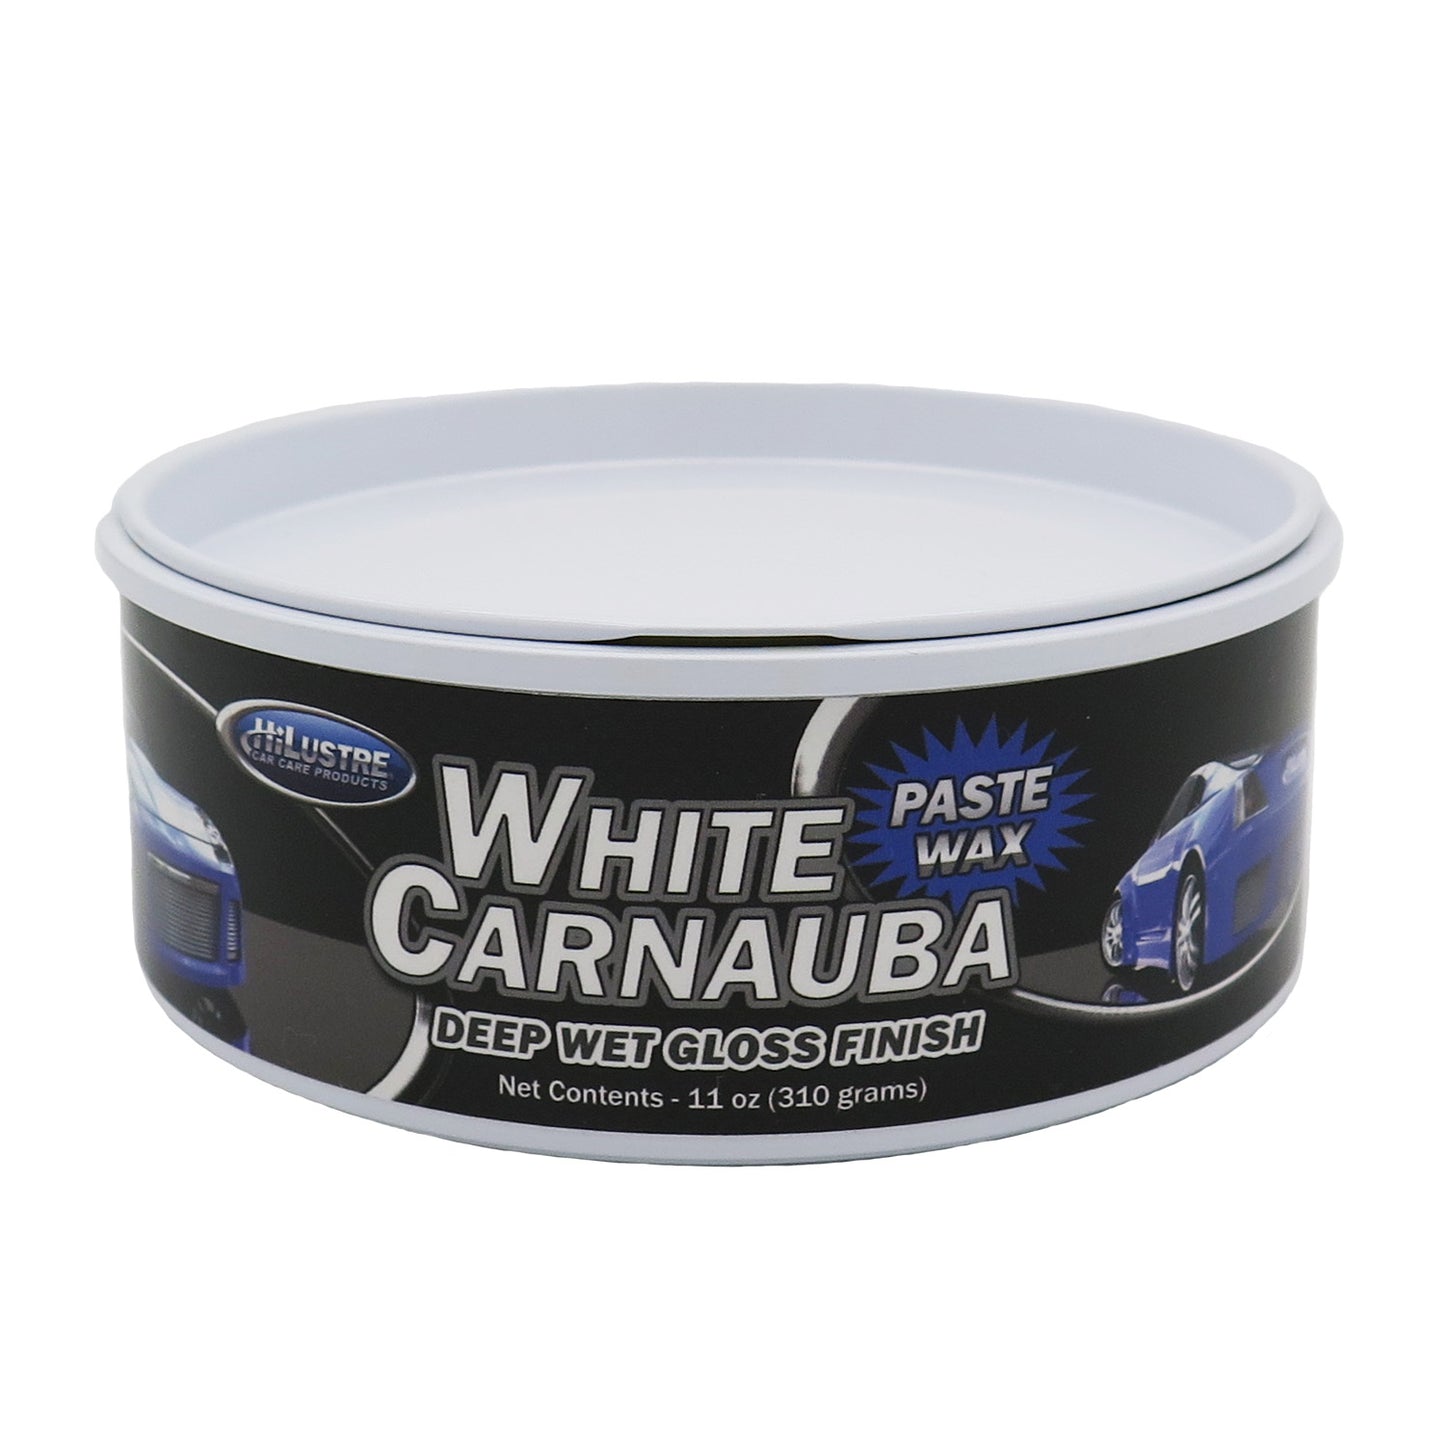 White Carnauba Paste Wax